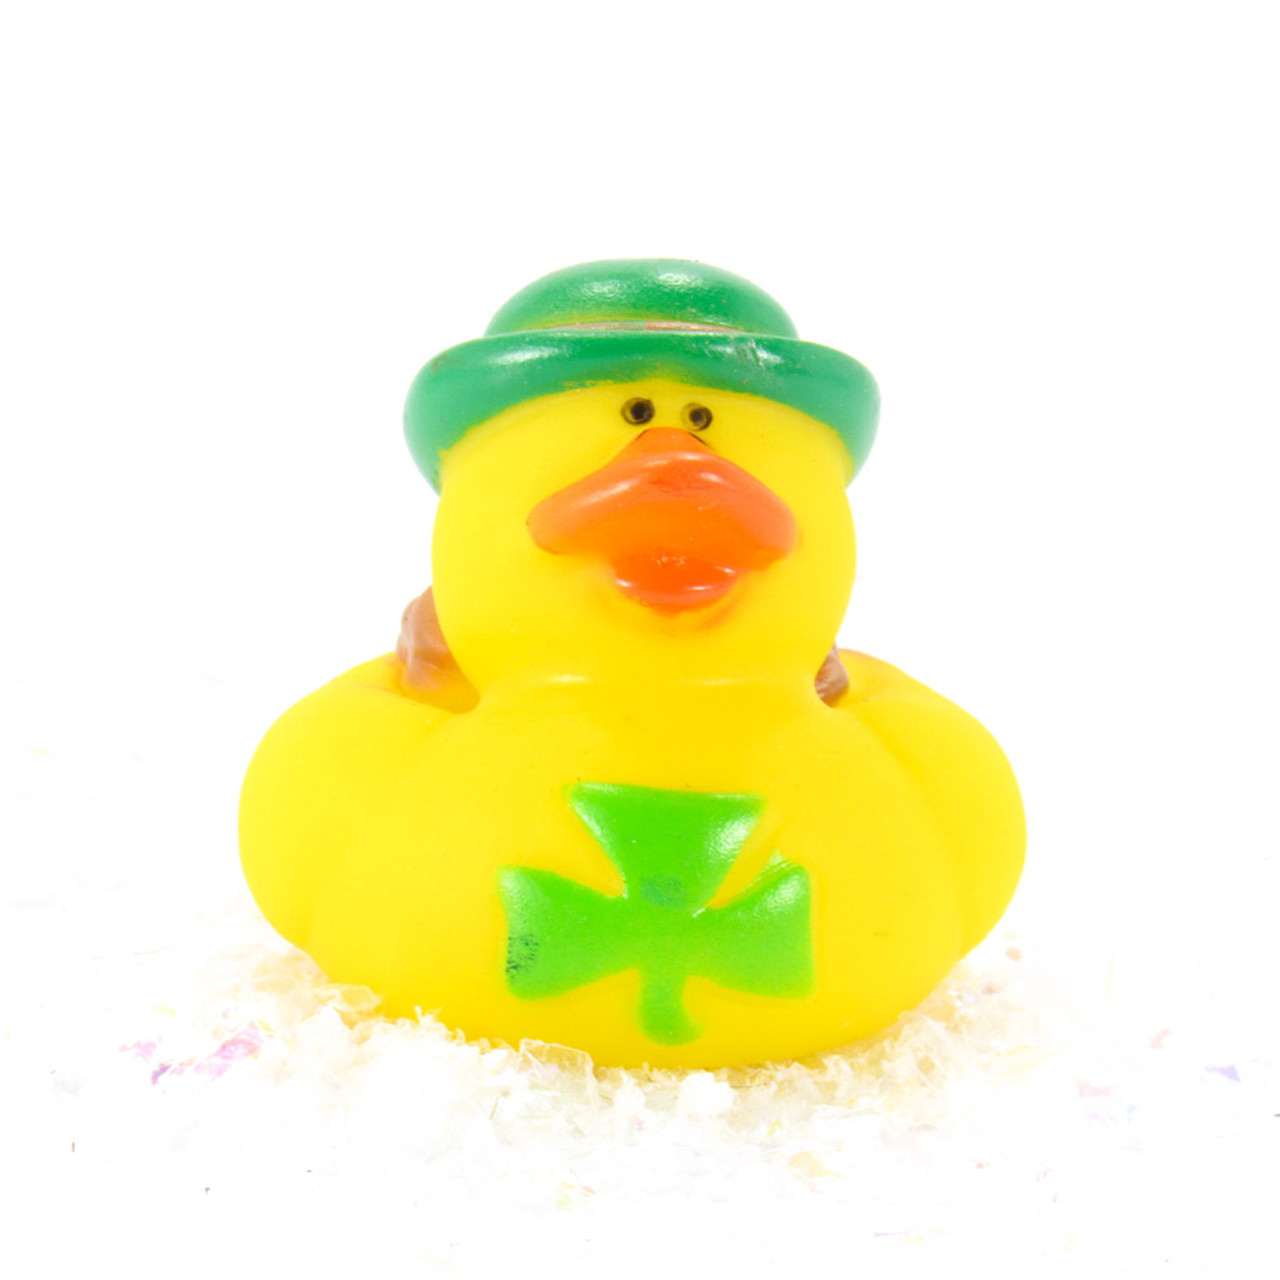 24 PC St. Patrick's Day Mini Shamrock Rubber Ducks